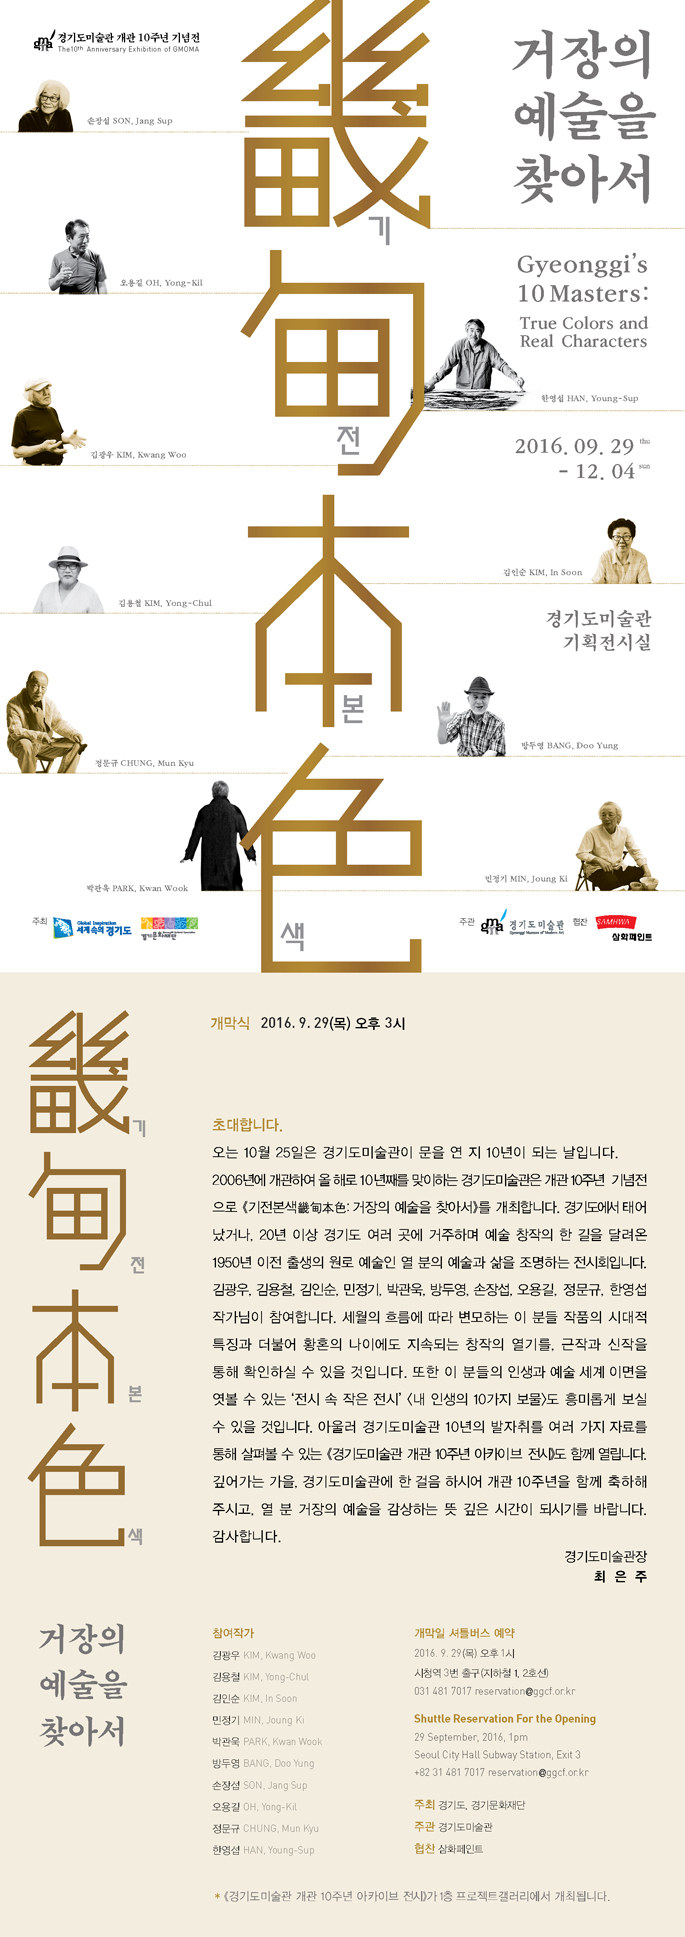 Gyeonggi's 10 Masters: True Colors and Real Characters